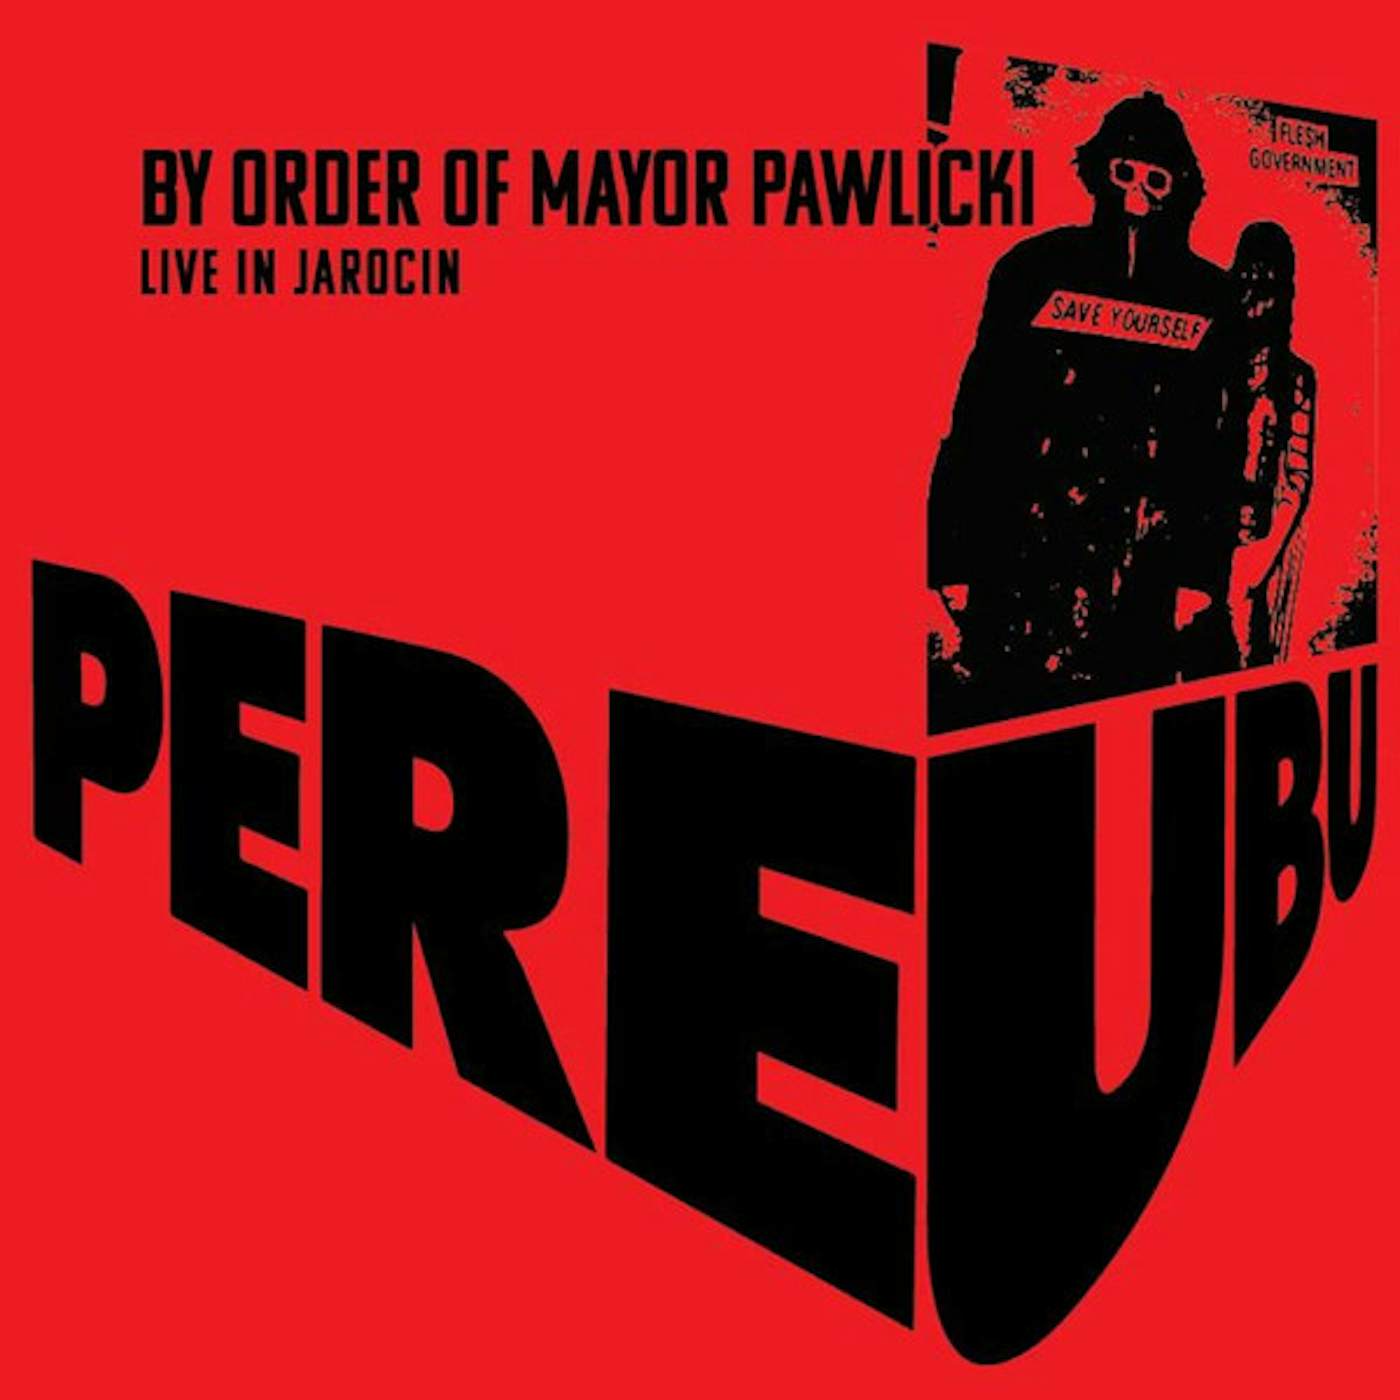 Pere Ubu BY ORDER OF MAYOR PAWLICKI (LIVE IN JAROCIN) (2LP/COLOURED VINYL) Vinyl Record